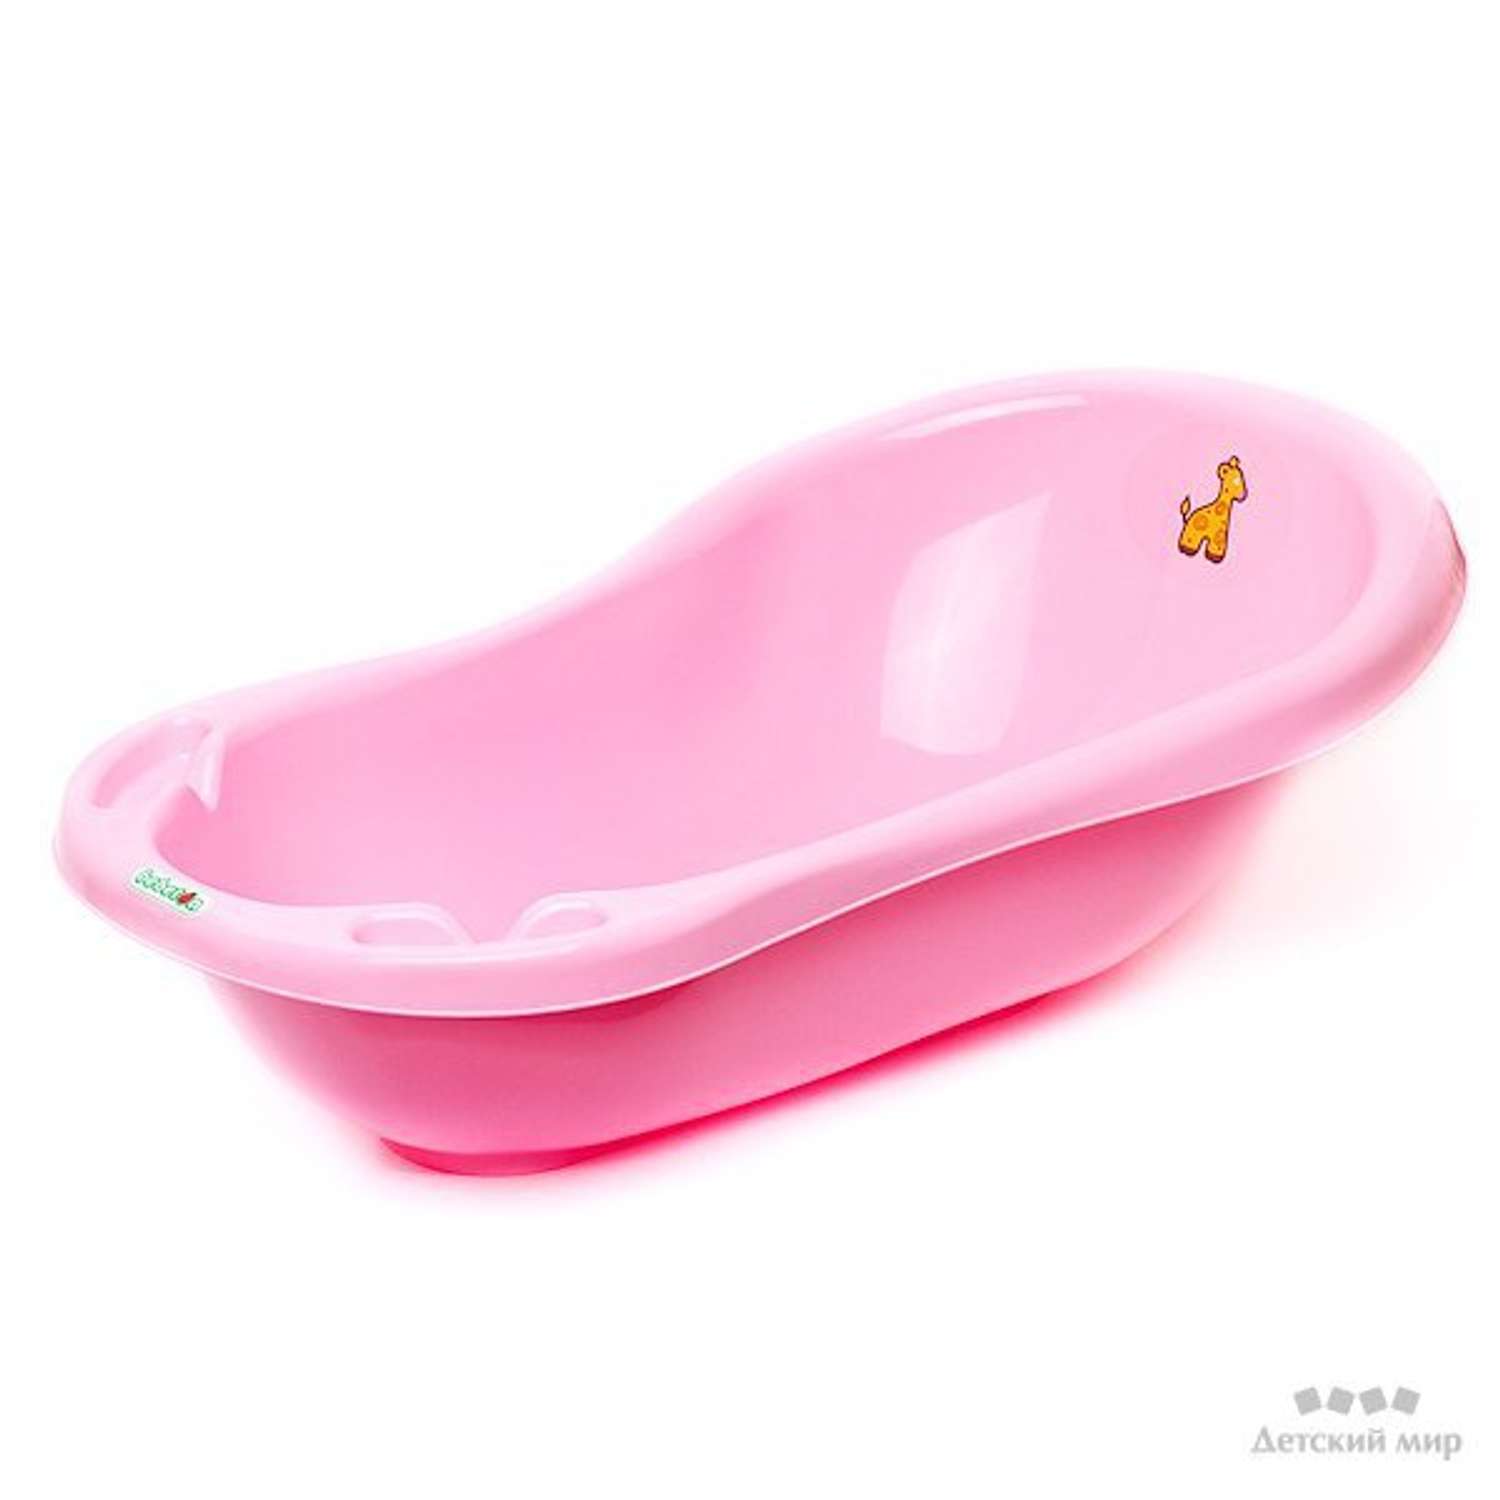 Ванночка спб. Ванночка бебетон. Детская ванна Babyton 100. Ванночка Babyton 46л. М3222 ванна детская "Карапуз"(розовый).